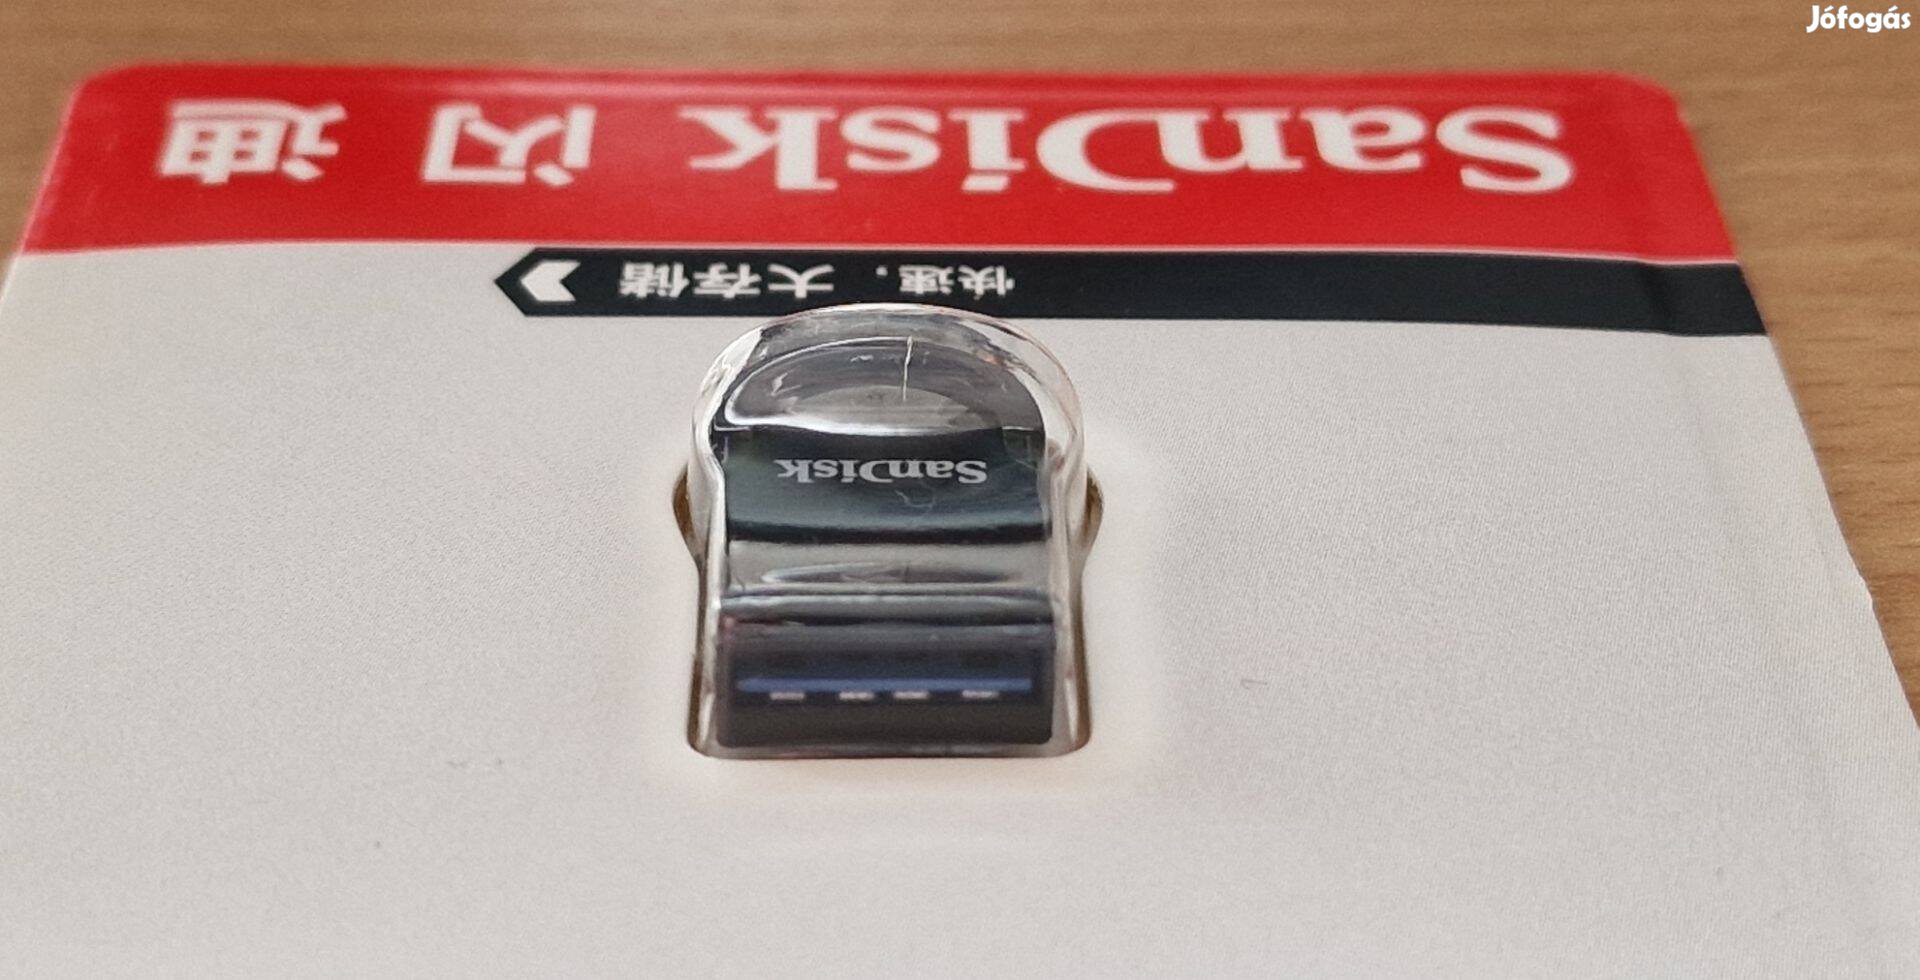 Sandisk 16 GB-os mini pendrive USB flash meghajtó